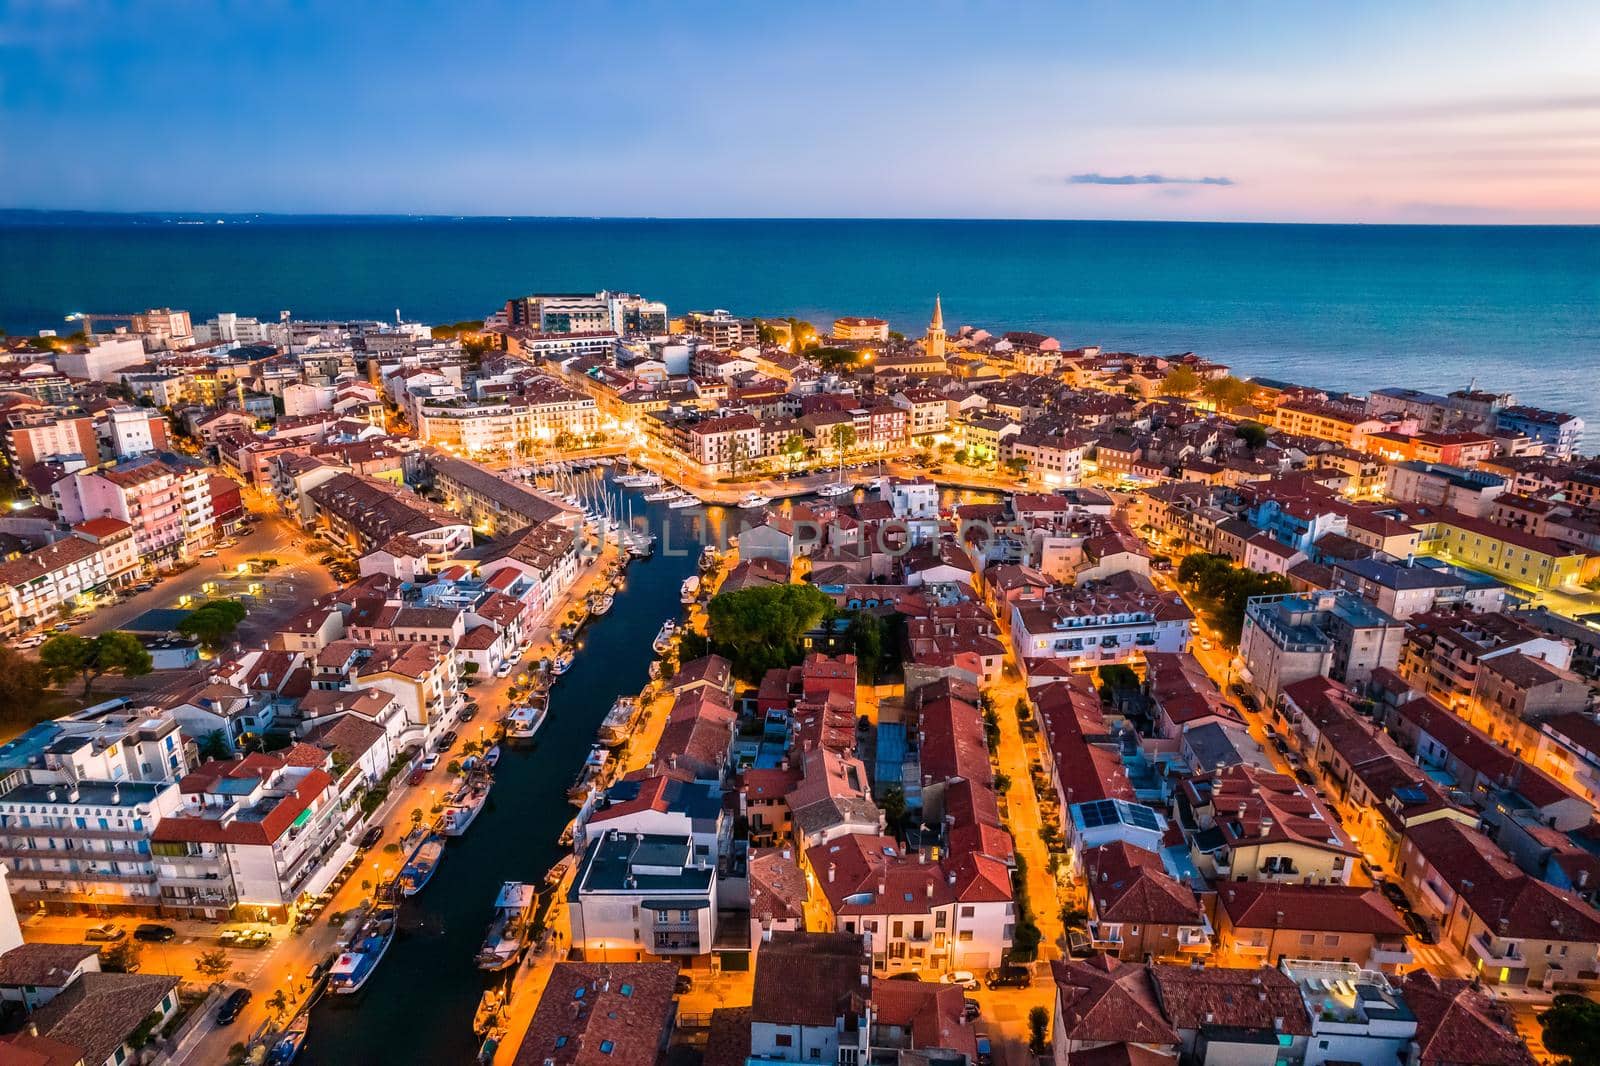 Town of Grado on Adriatic sea aerial evening view by xbrchx